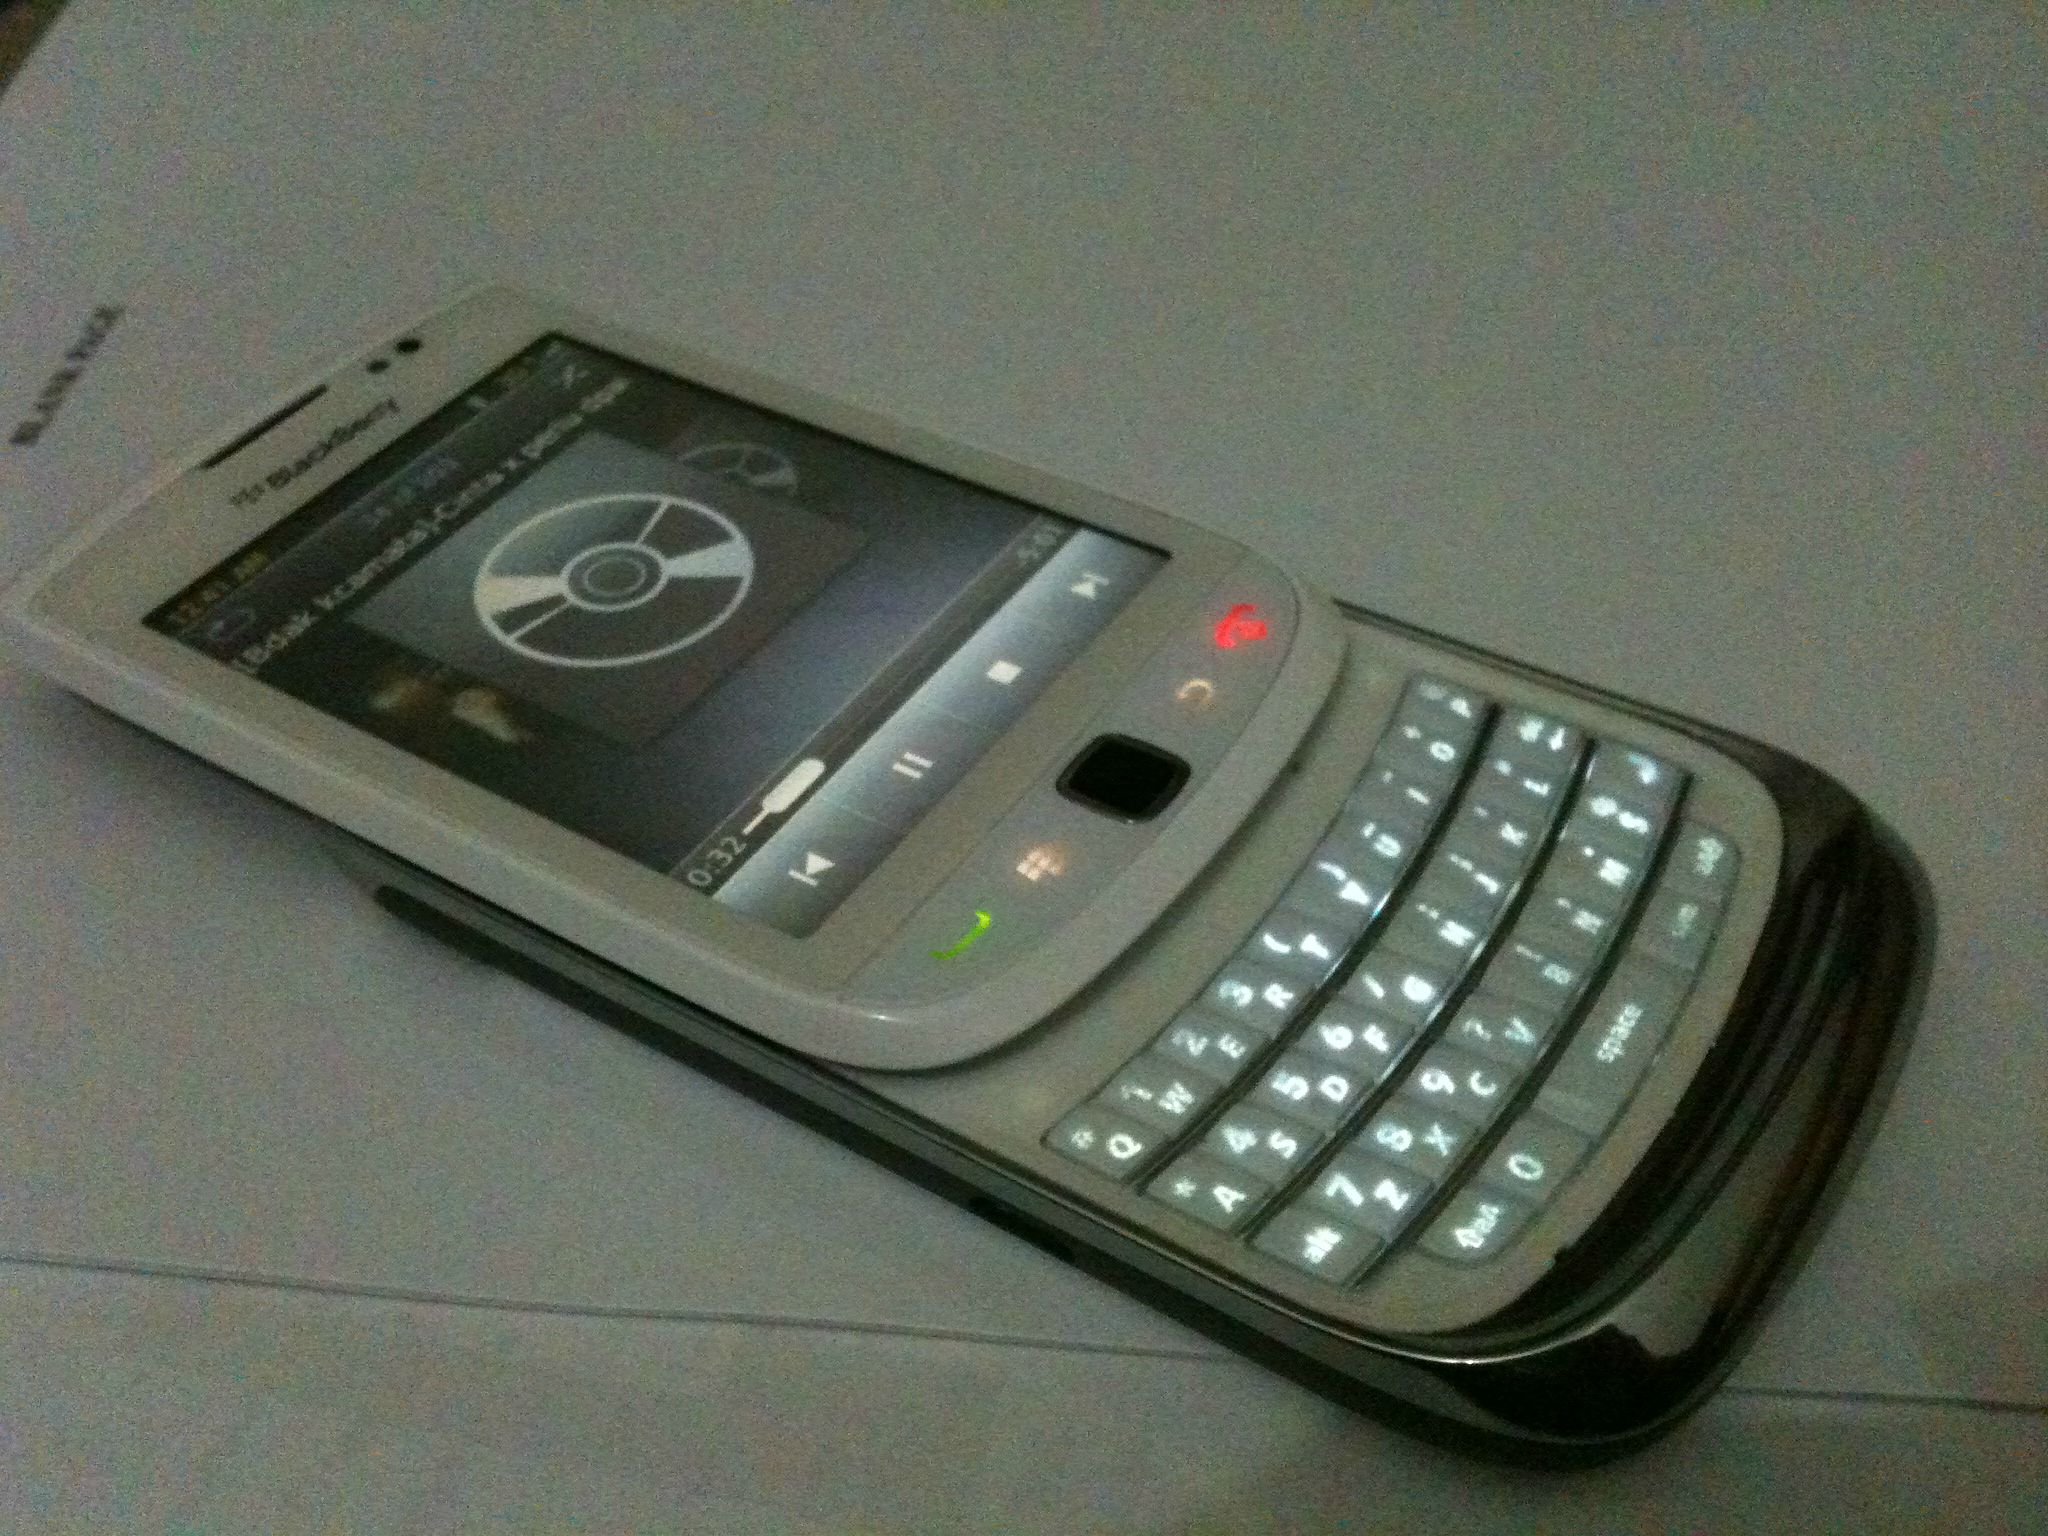 Blackberry Torch 9800 White Harga